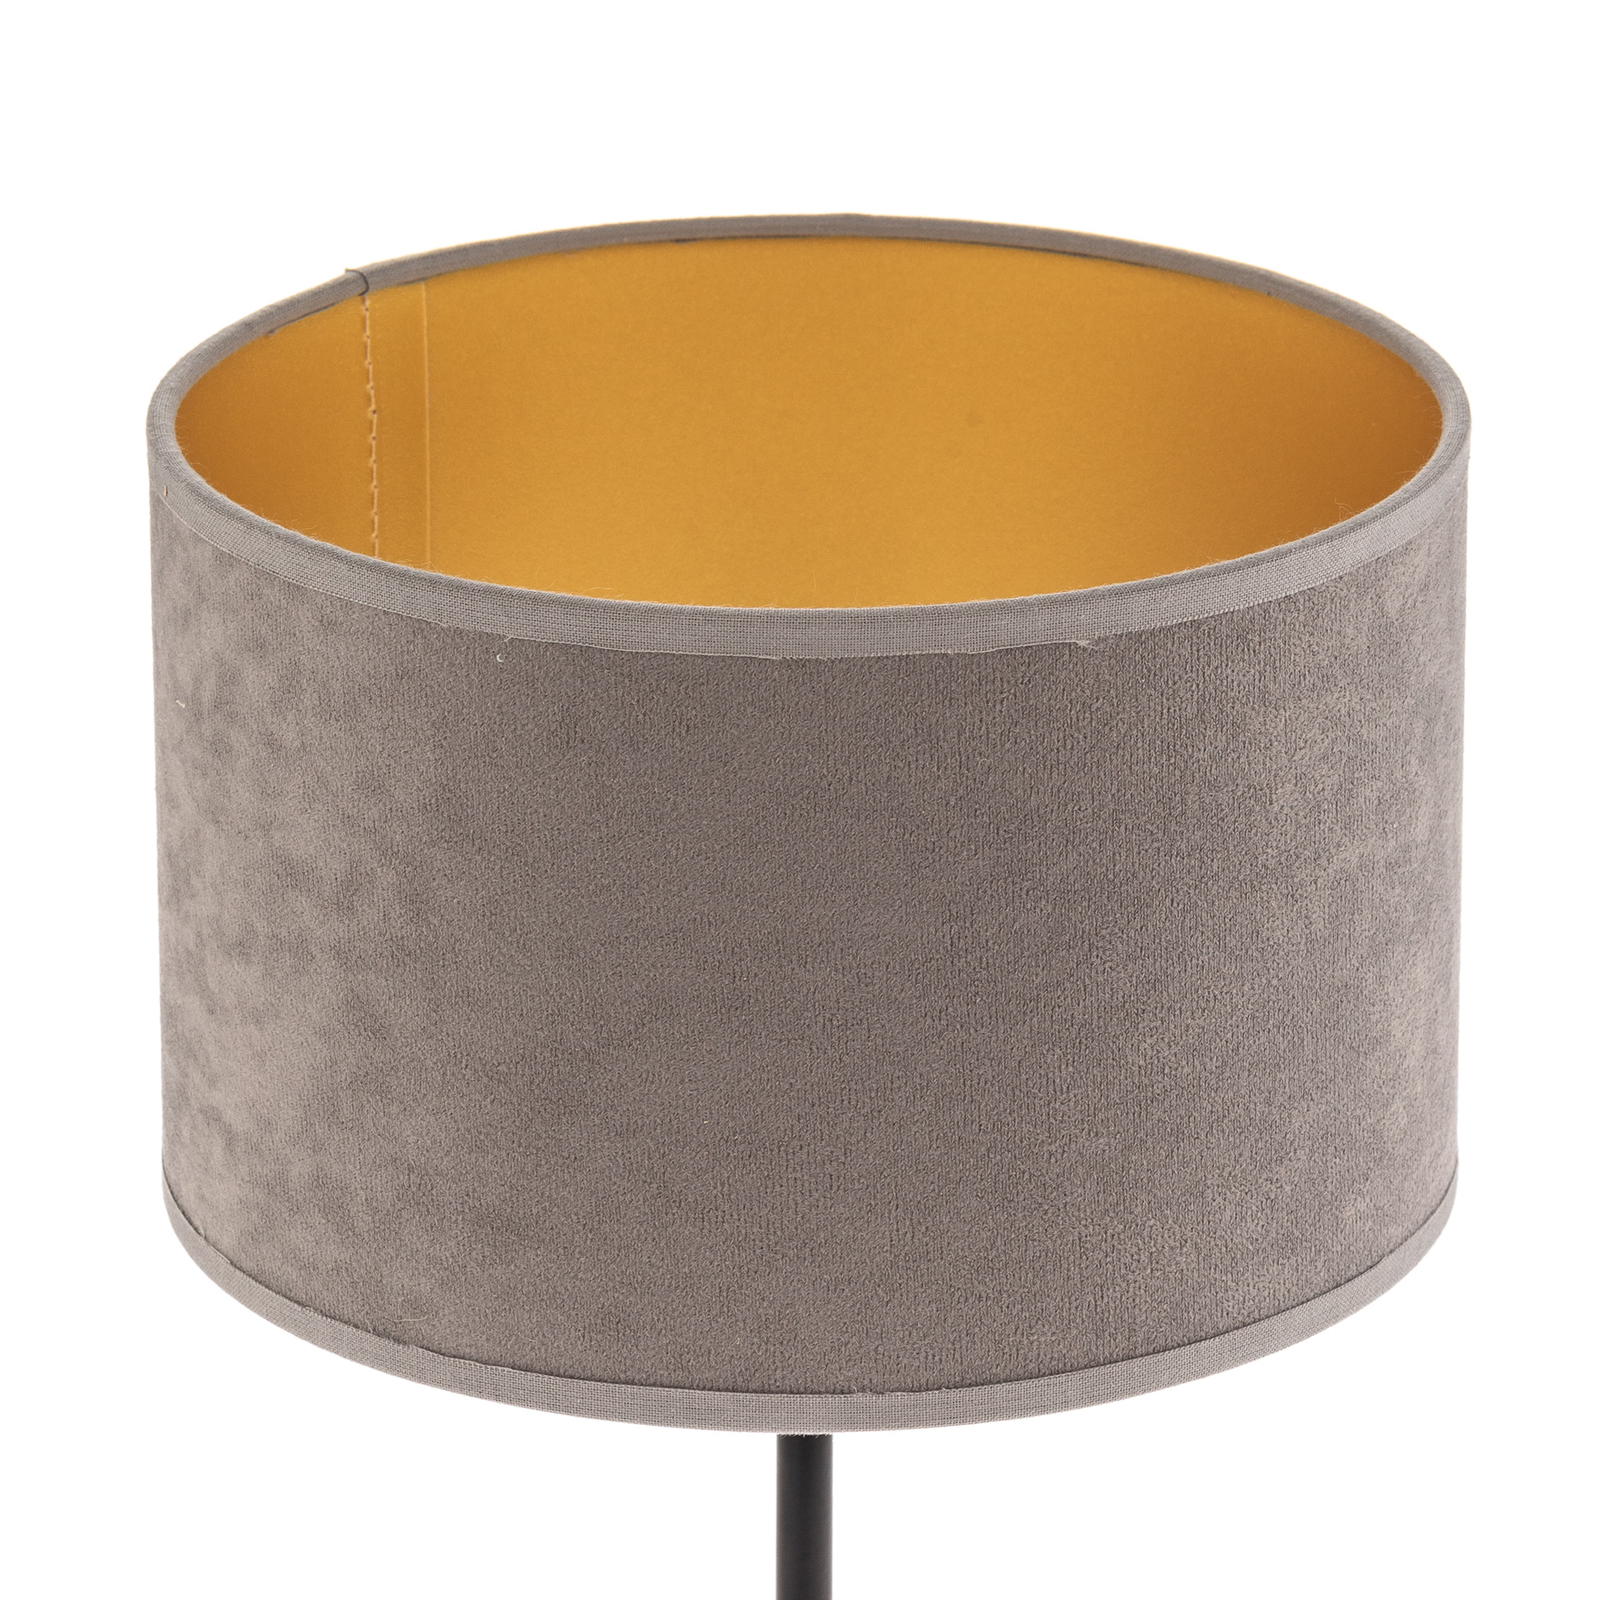 Lampa stołowa Golden Roller szara/złota 30cm